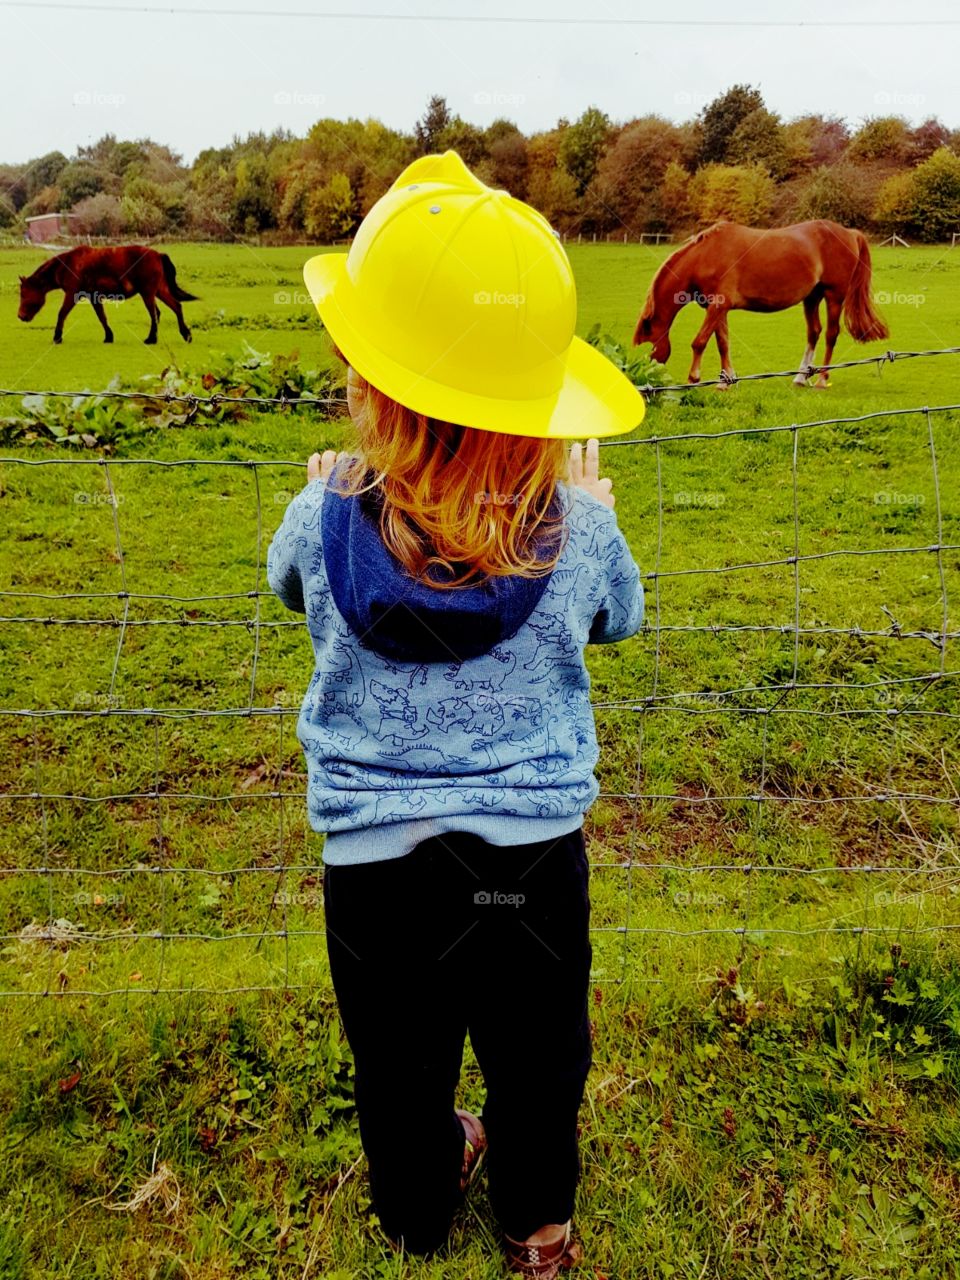 My son adoring the horses